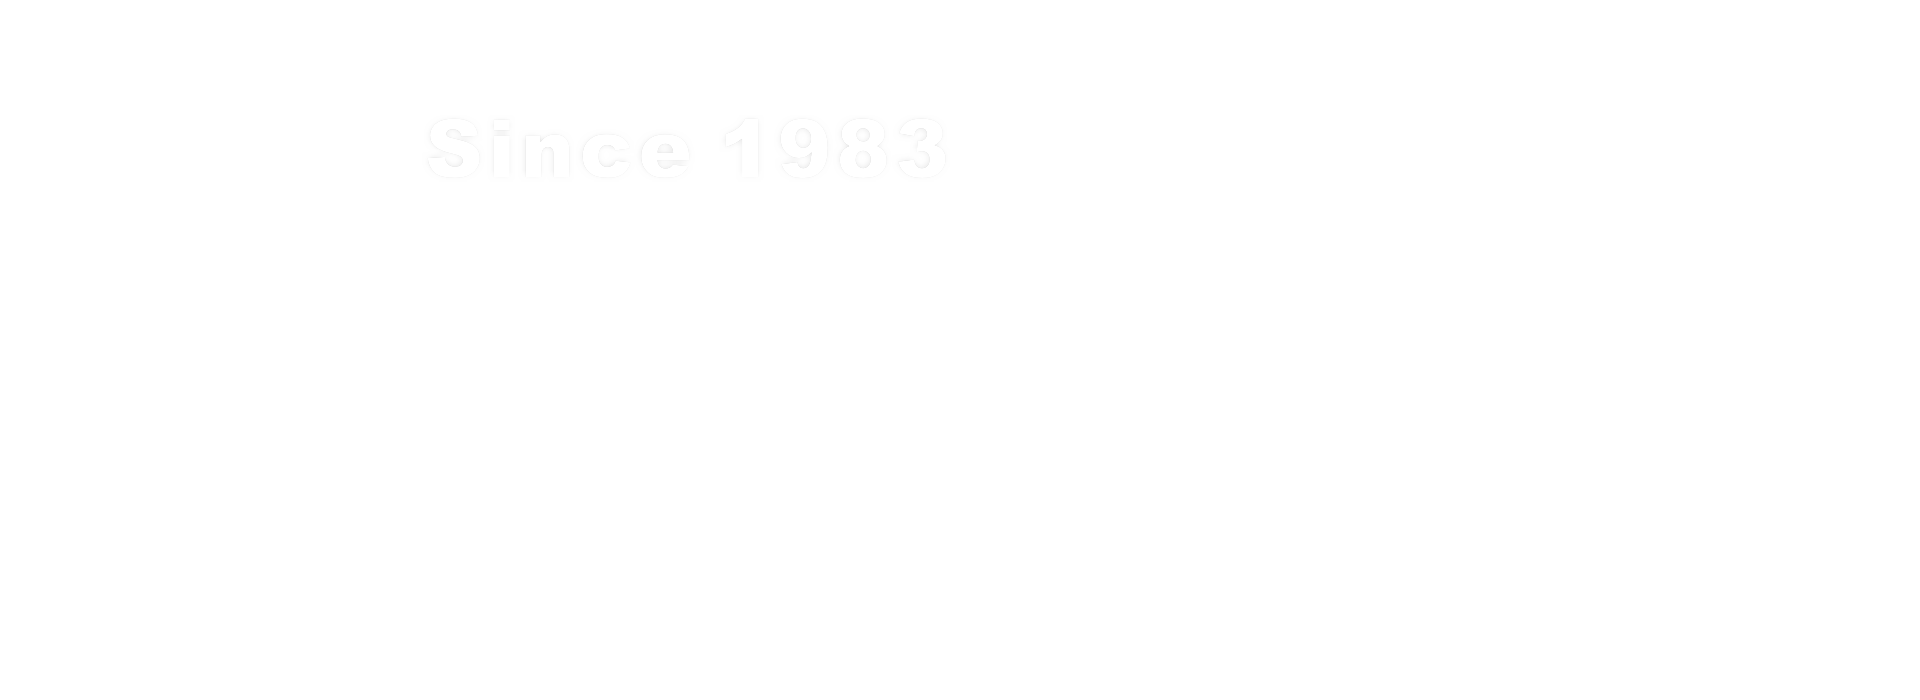 Grandye Switch Banner 0301